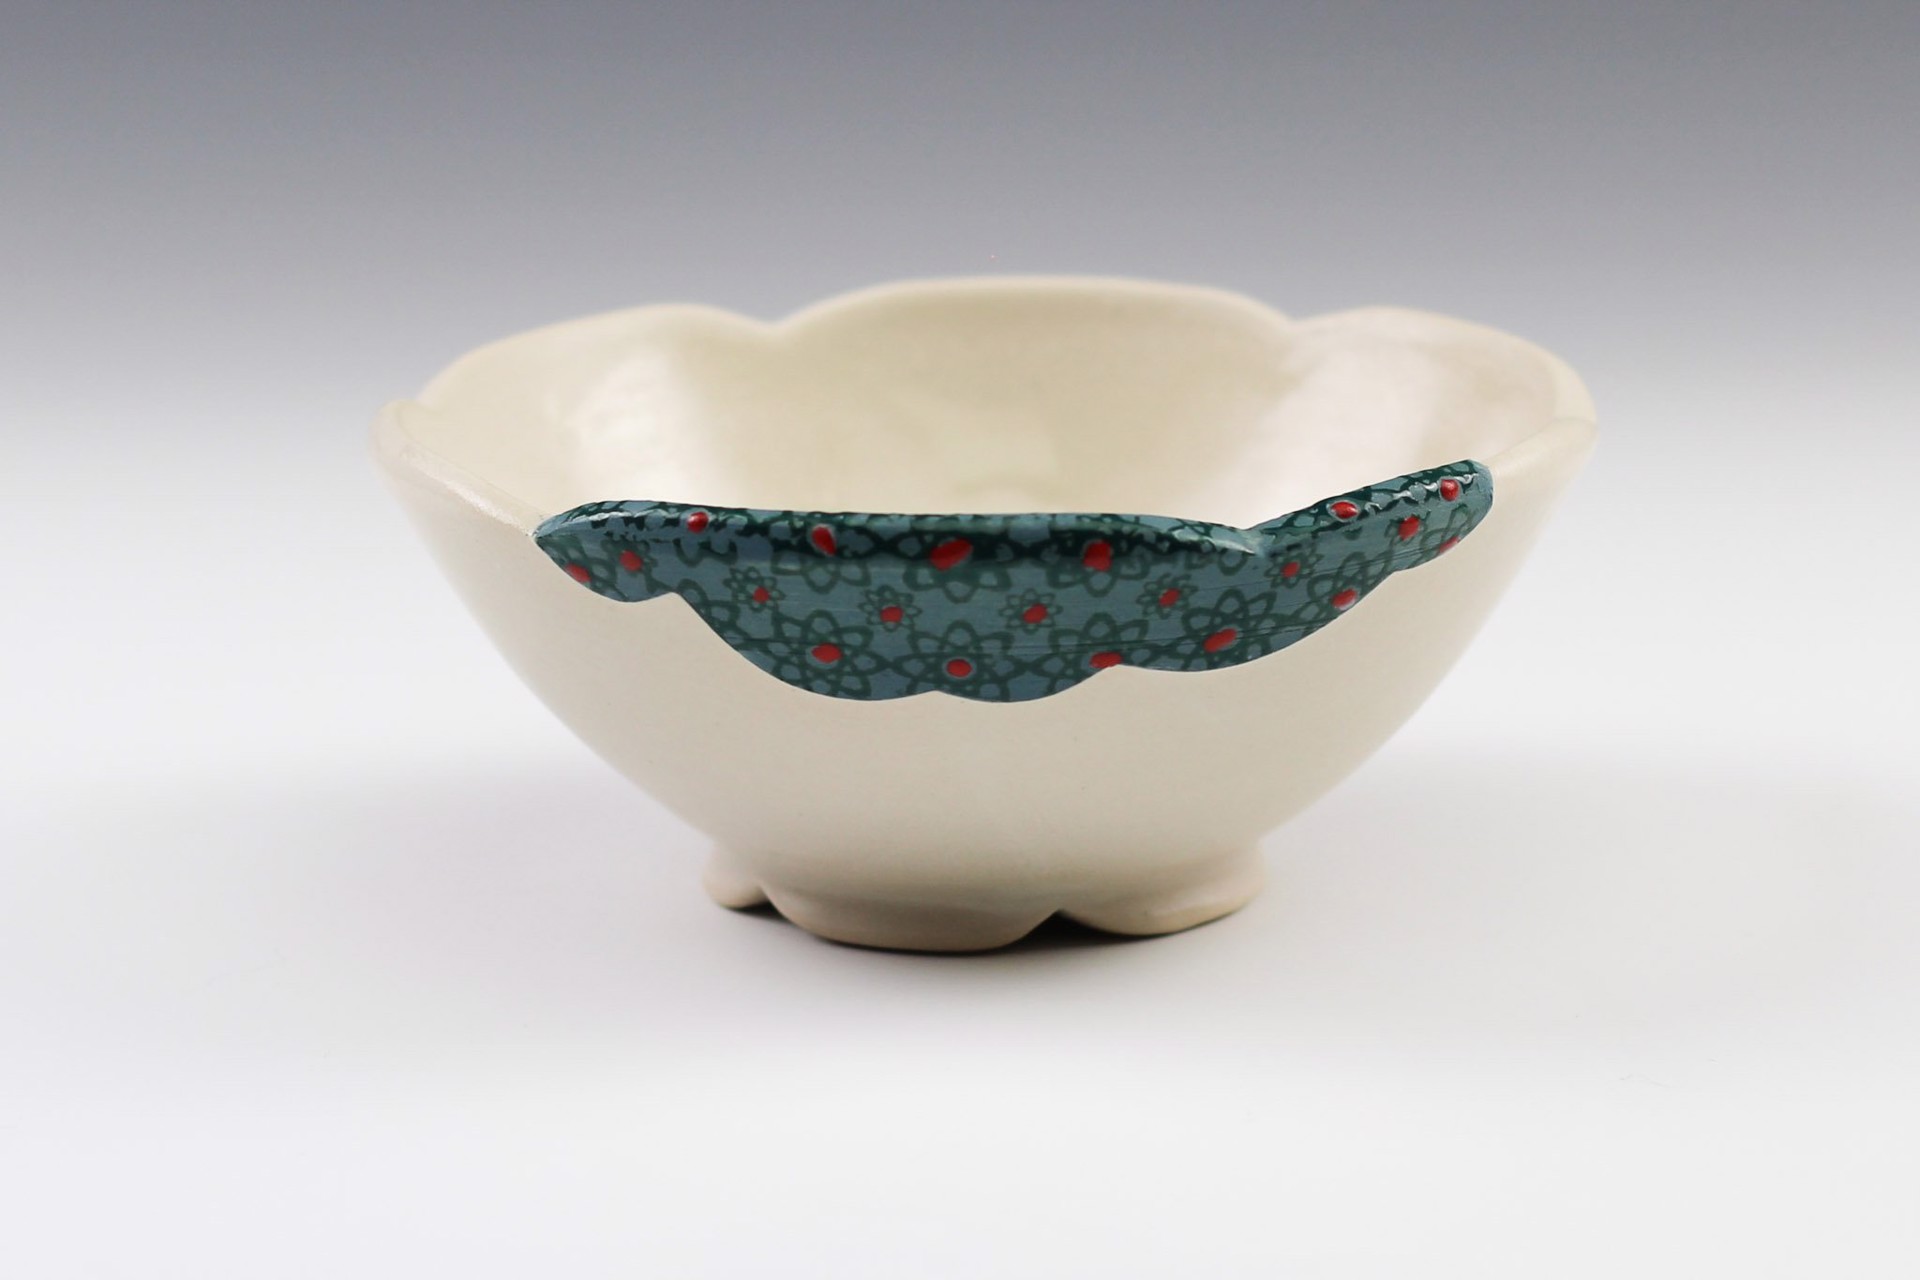 Bowl by Rachelle Miller